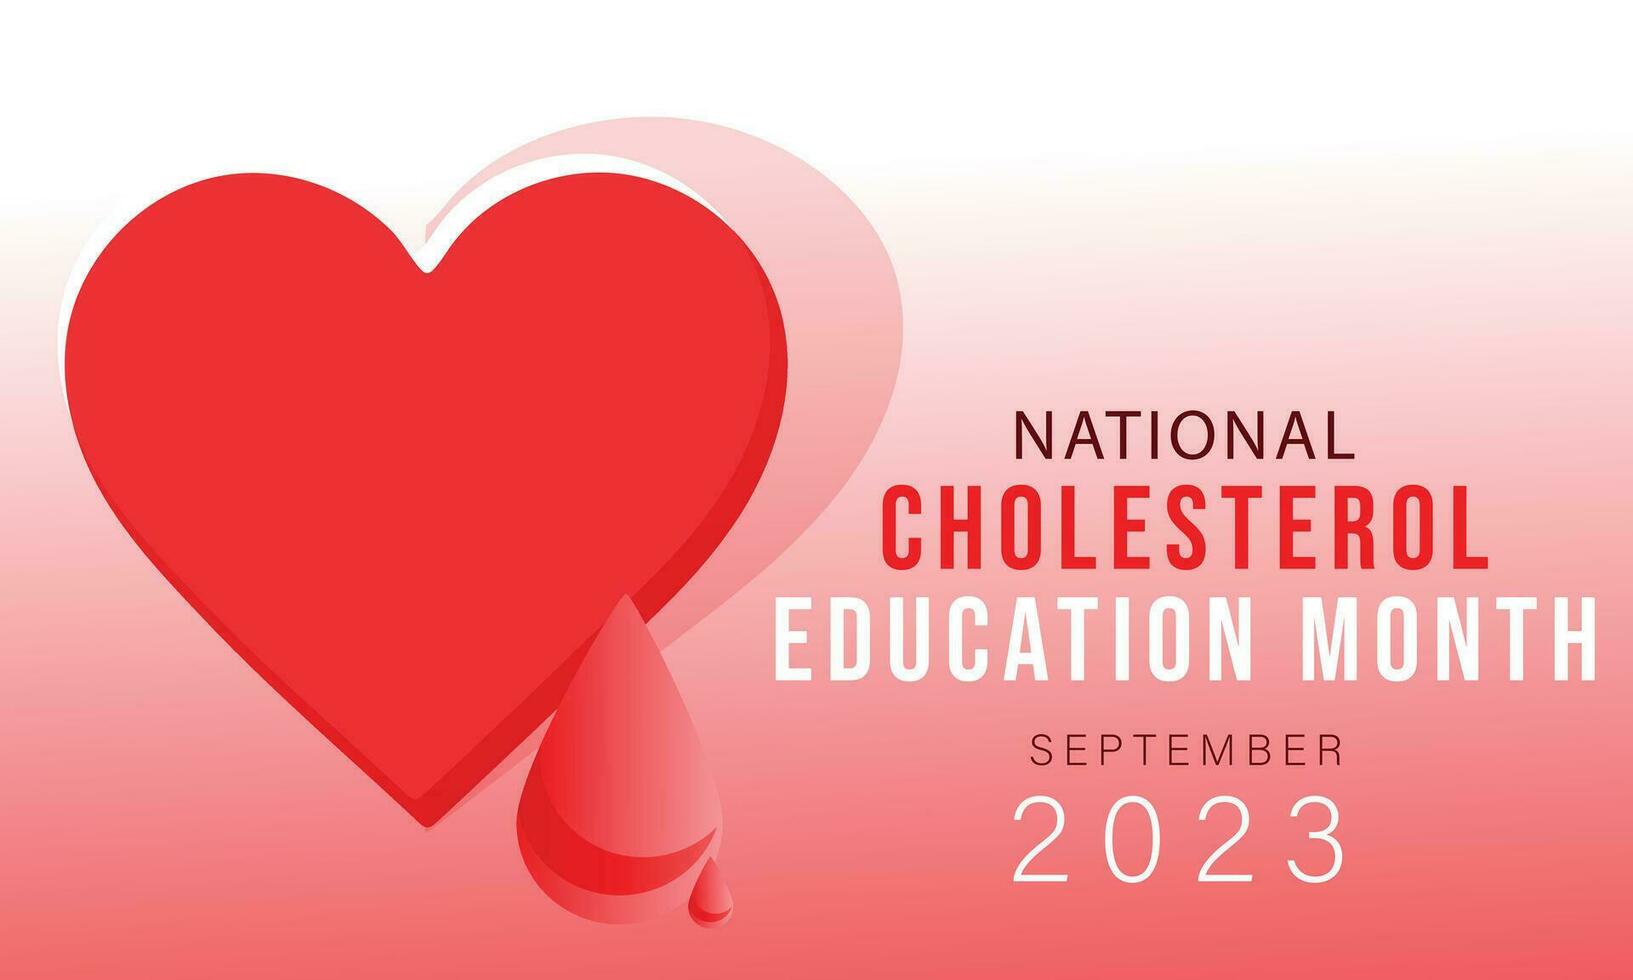 September is National Cholesterol education month. background, banner, card, poster, template. Vector illustration.